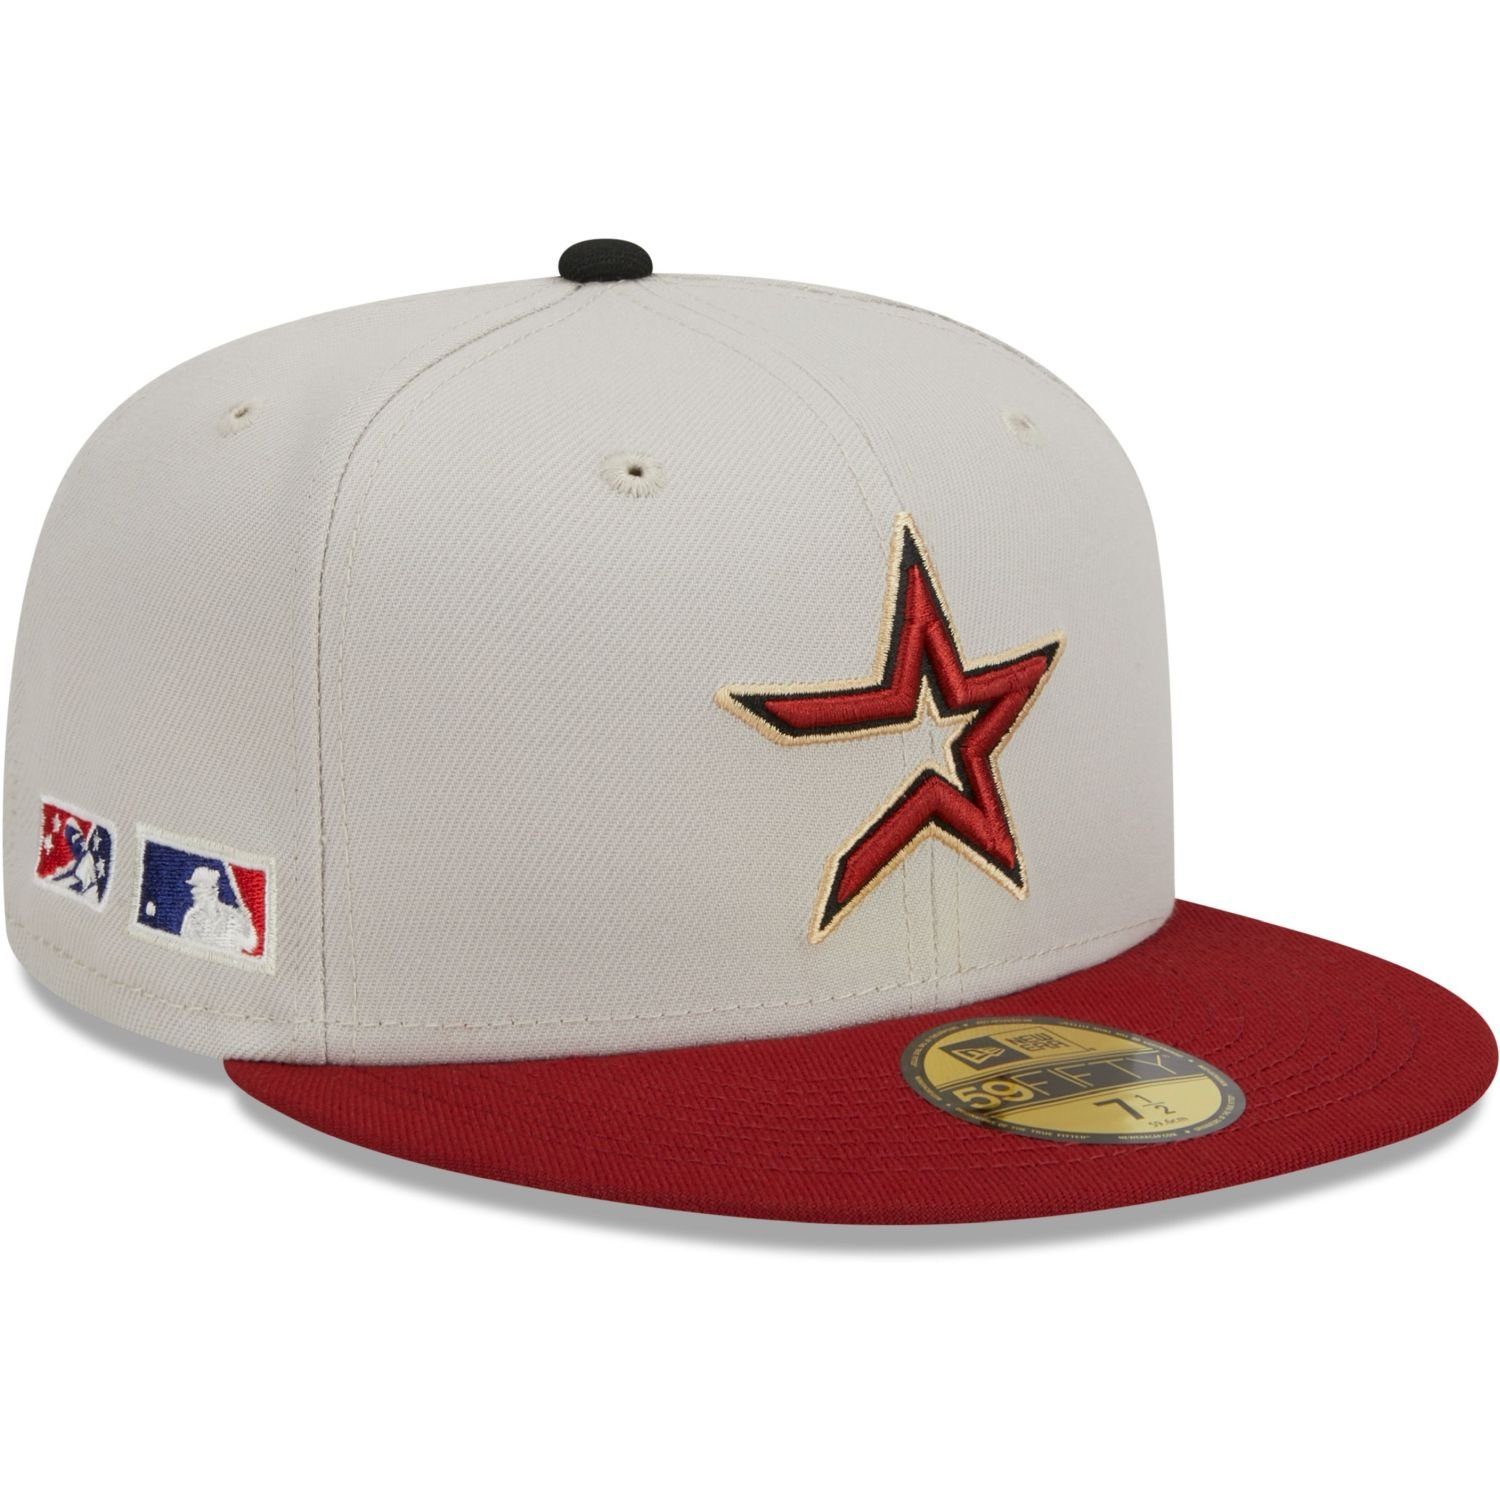 New Era Fitted Cap 59Fifty FARM TEAM Houston Astros